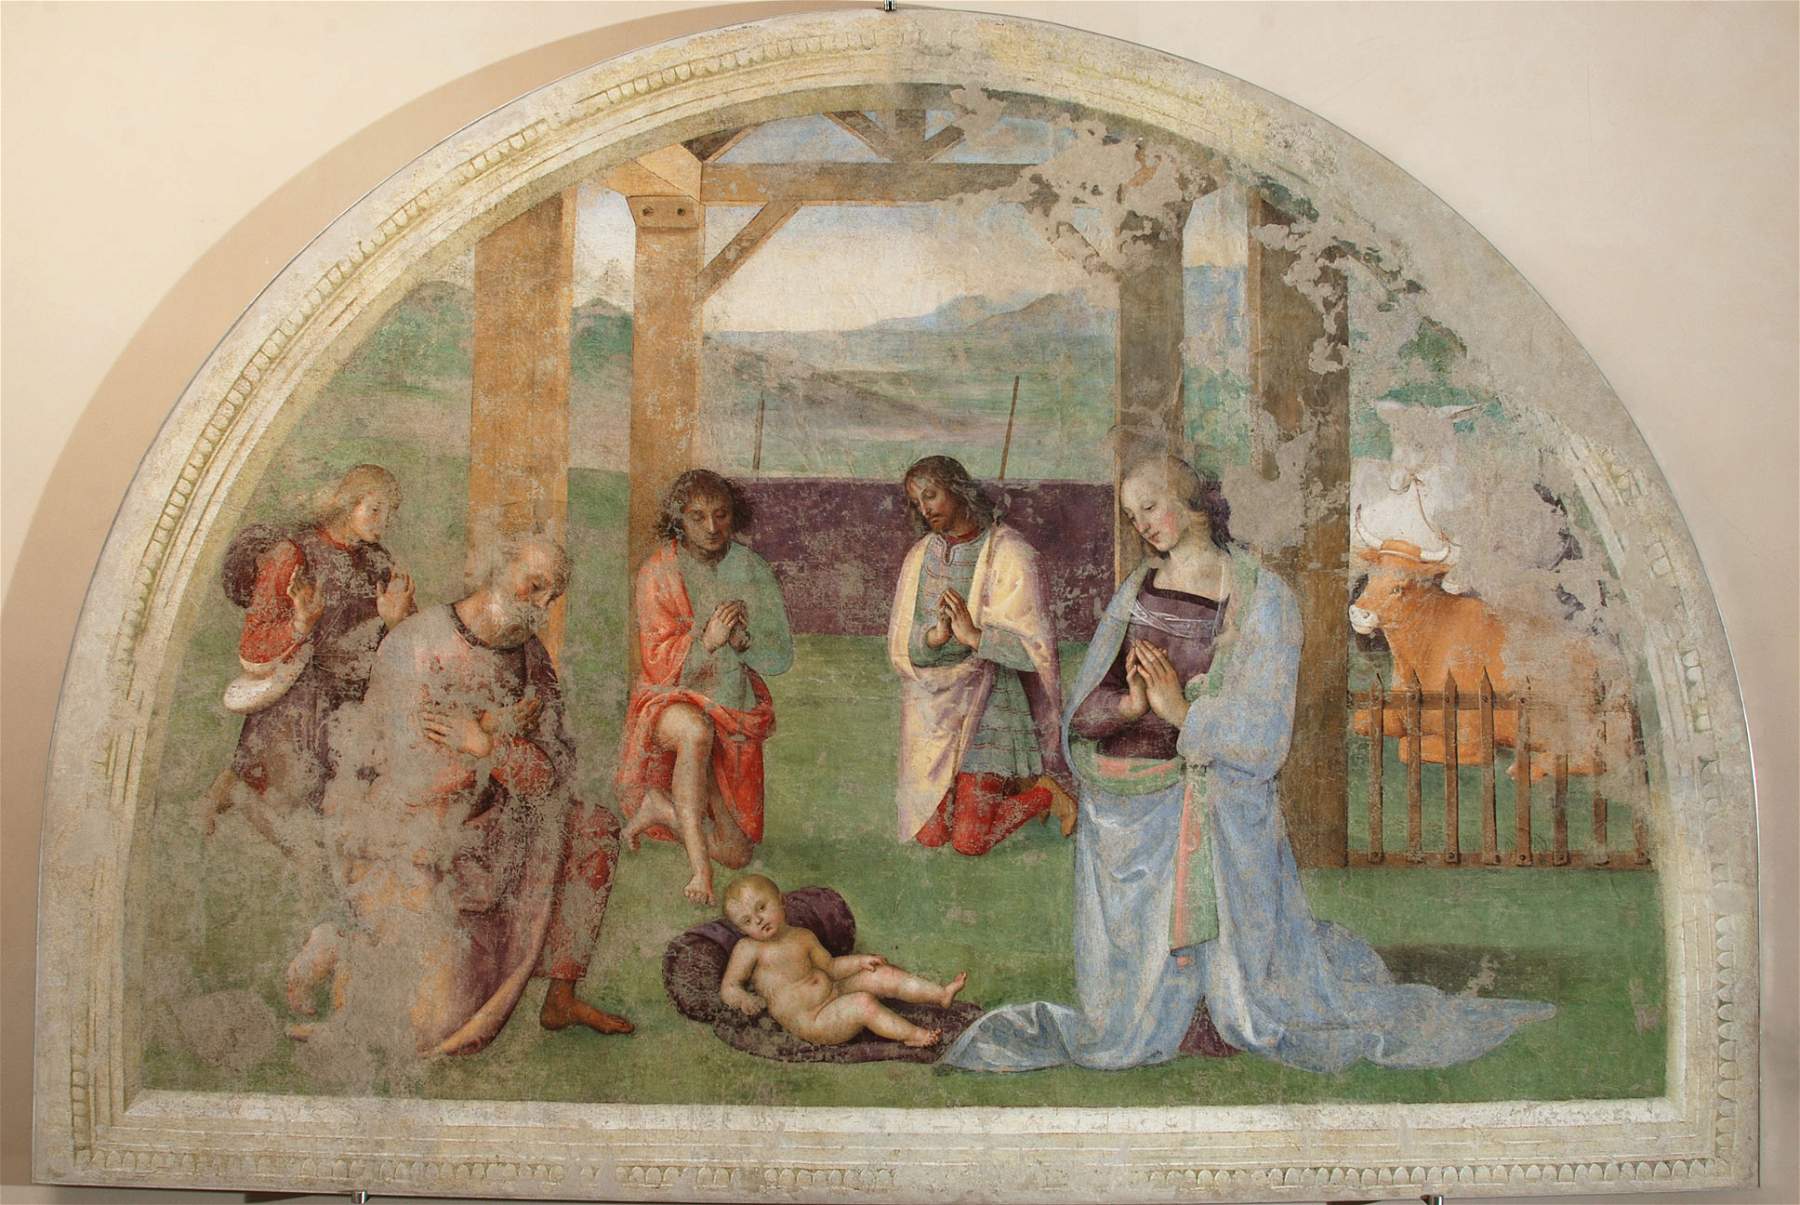 Perugia, restoration of Perugino's Adoration of the Shepherds begins